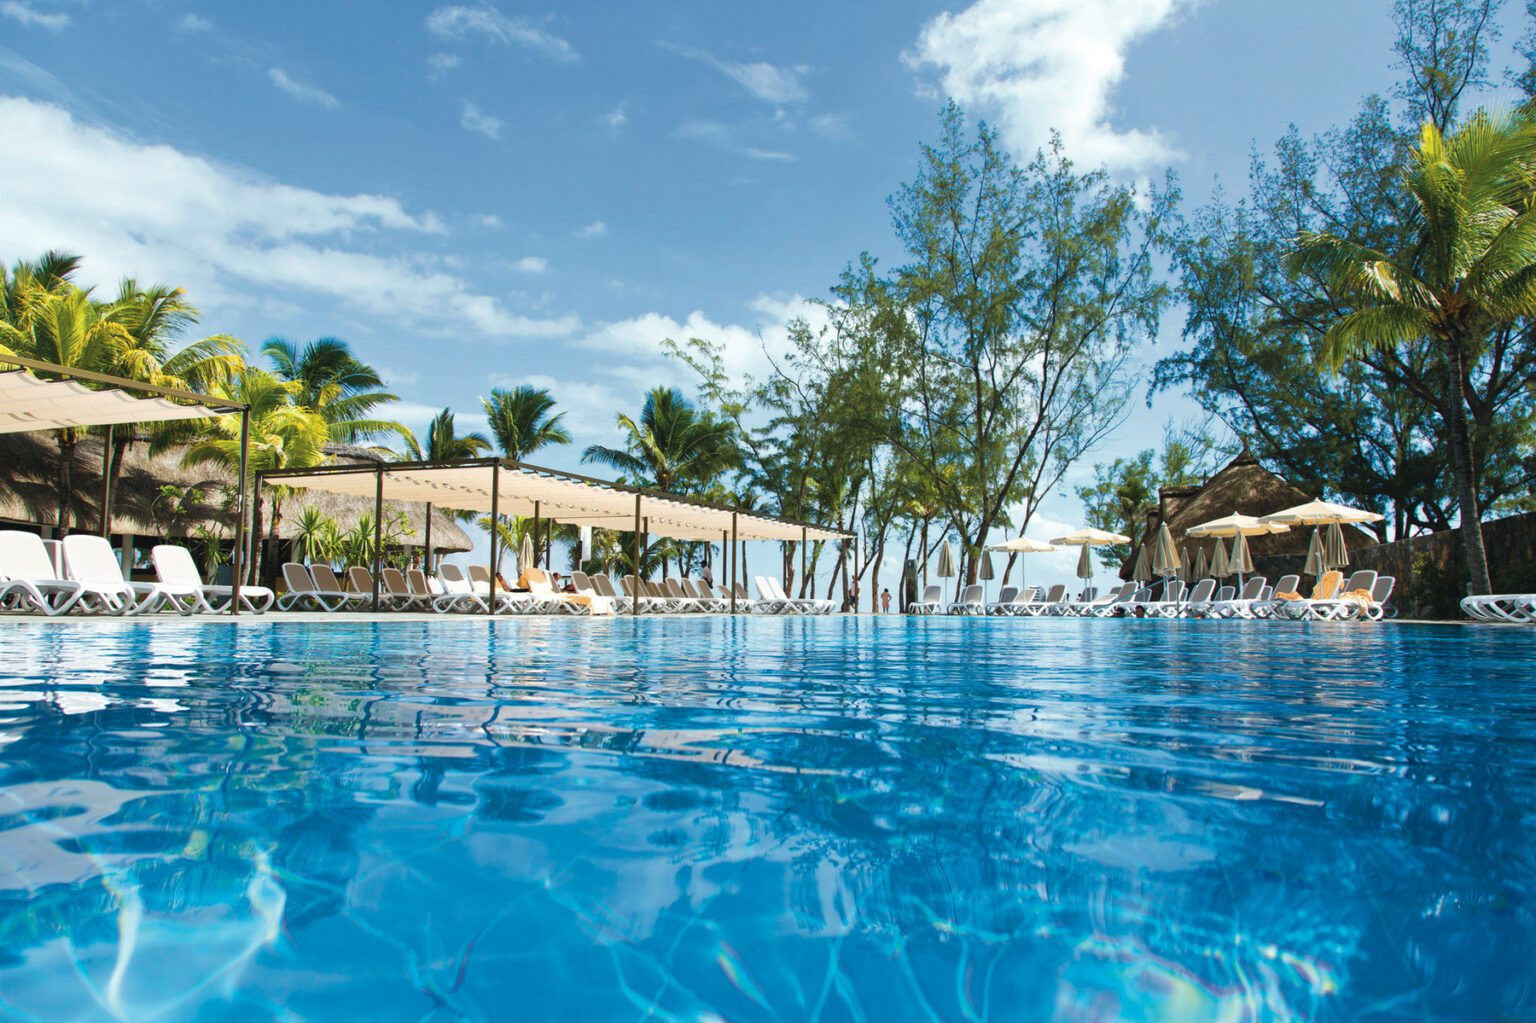 Pool in hotel in Mauritius